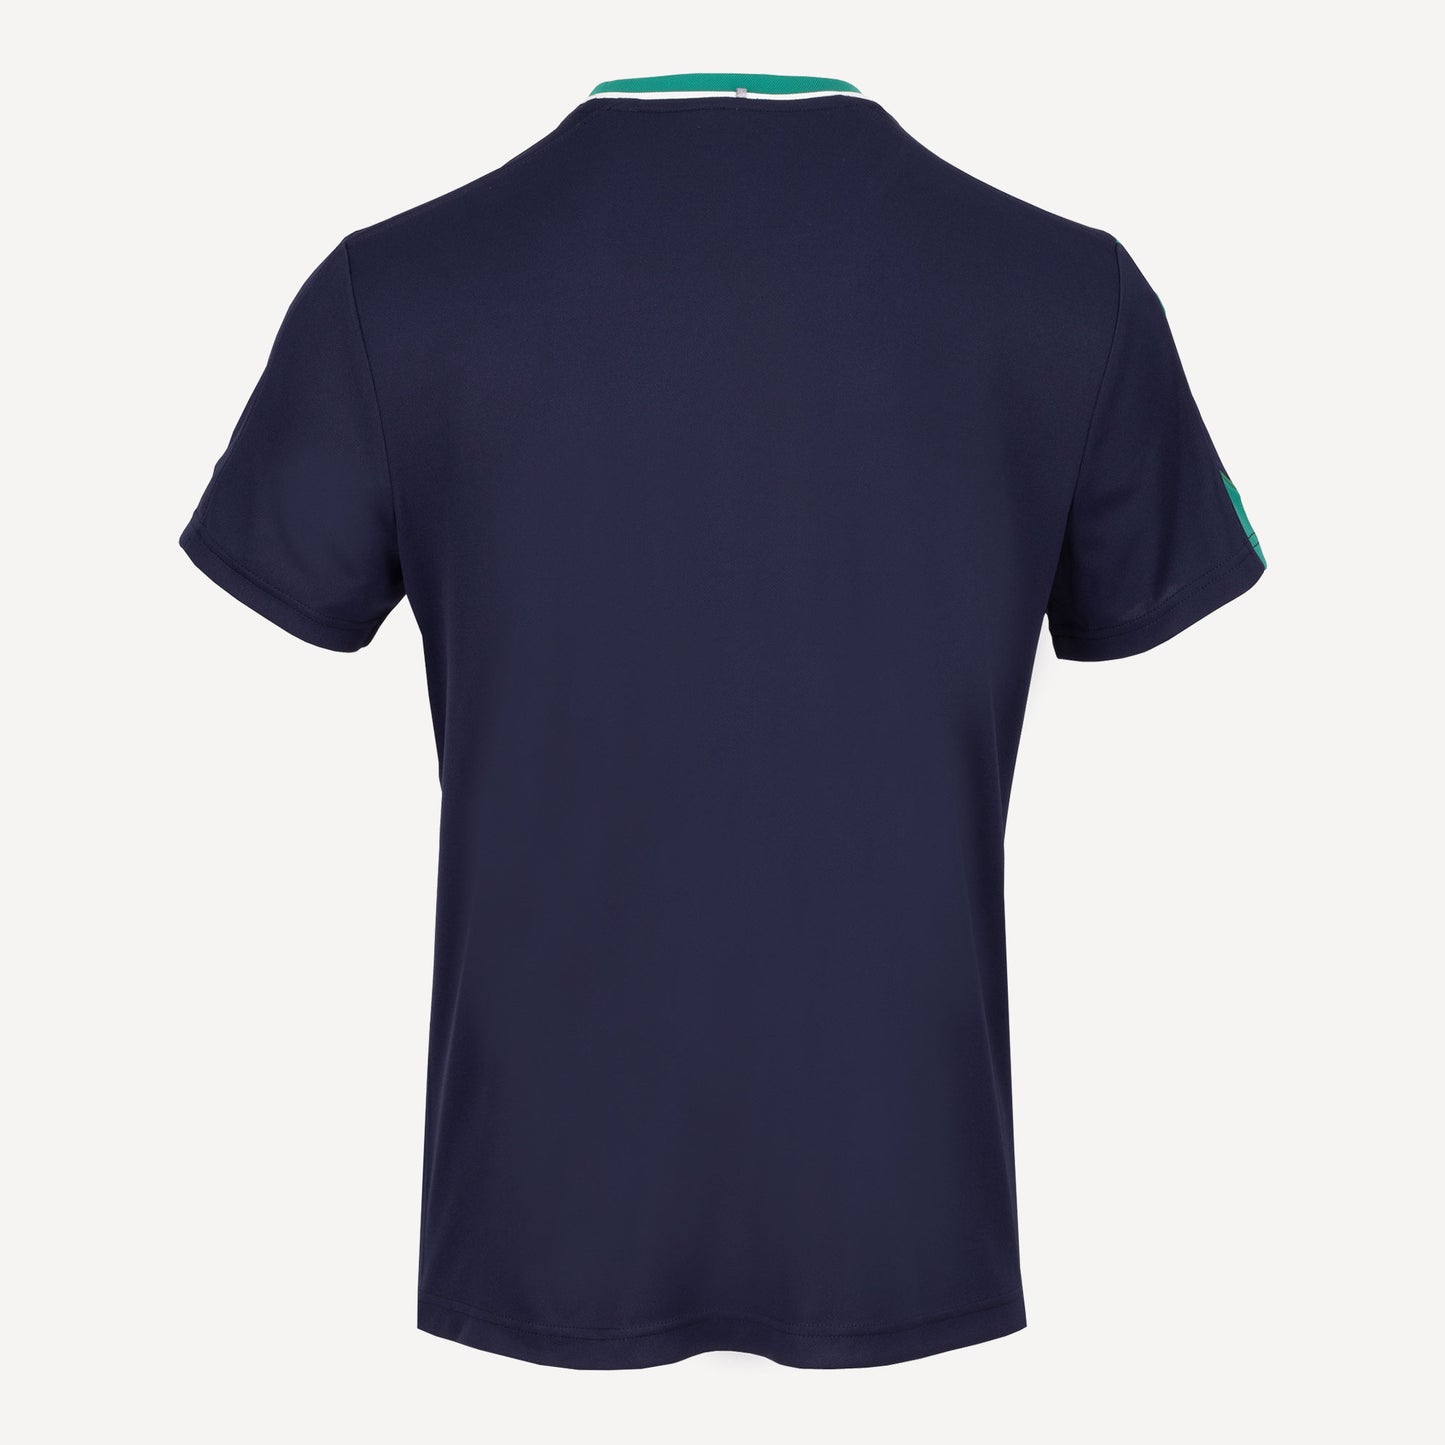 Fila Enzo Men's Tennis Shirt Dark Blue (2)